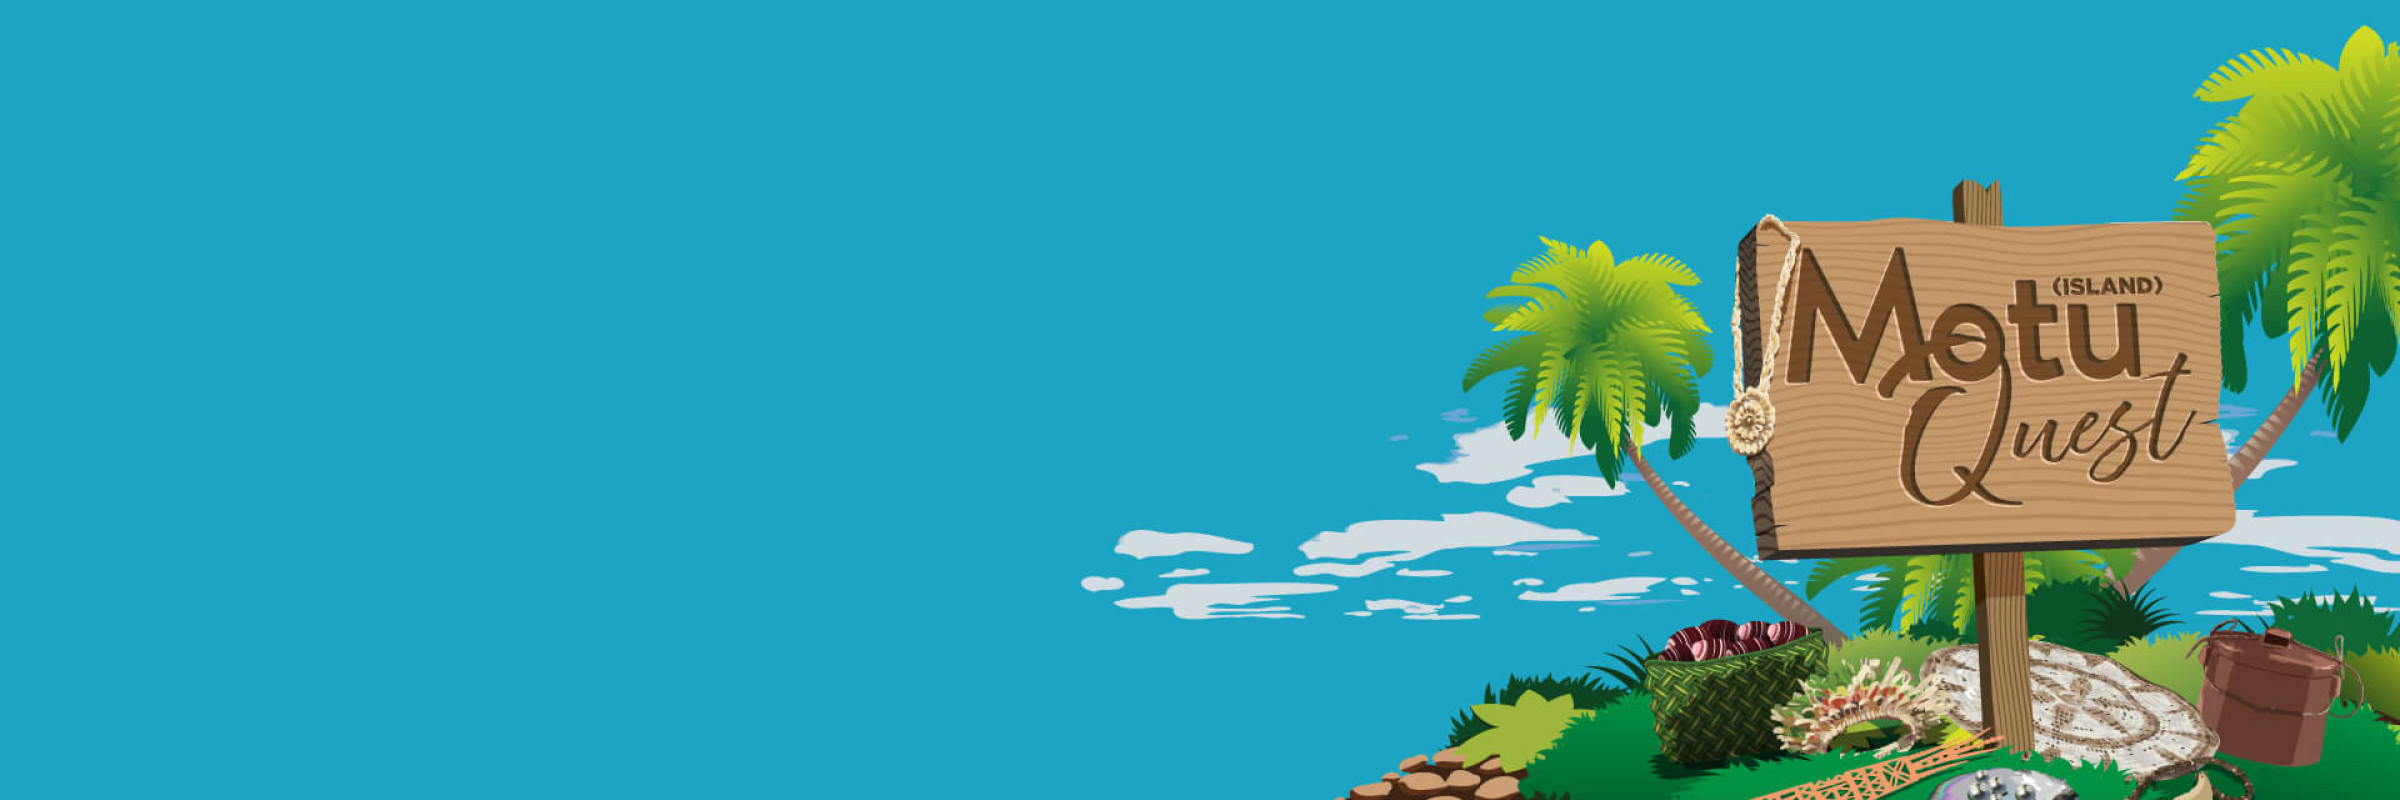 Motu Quest Landing page banner island